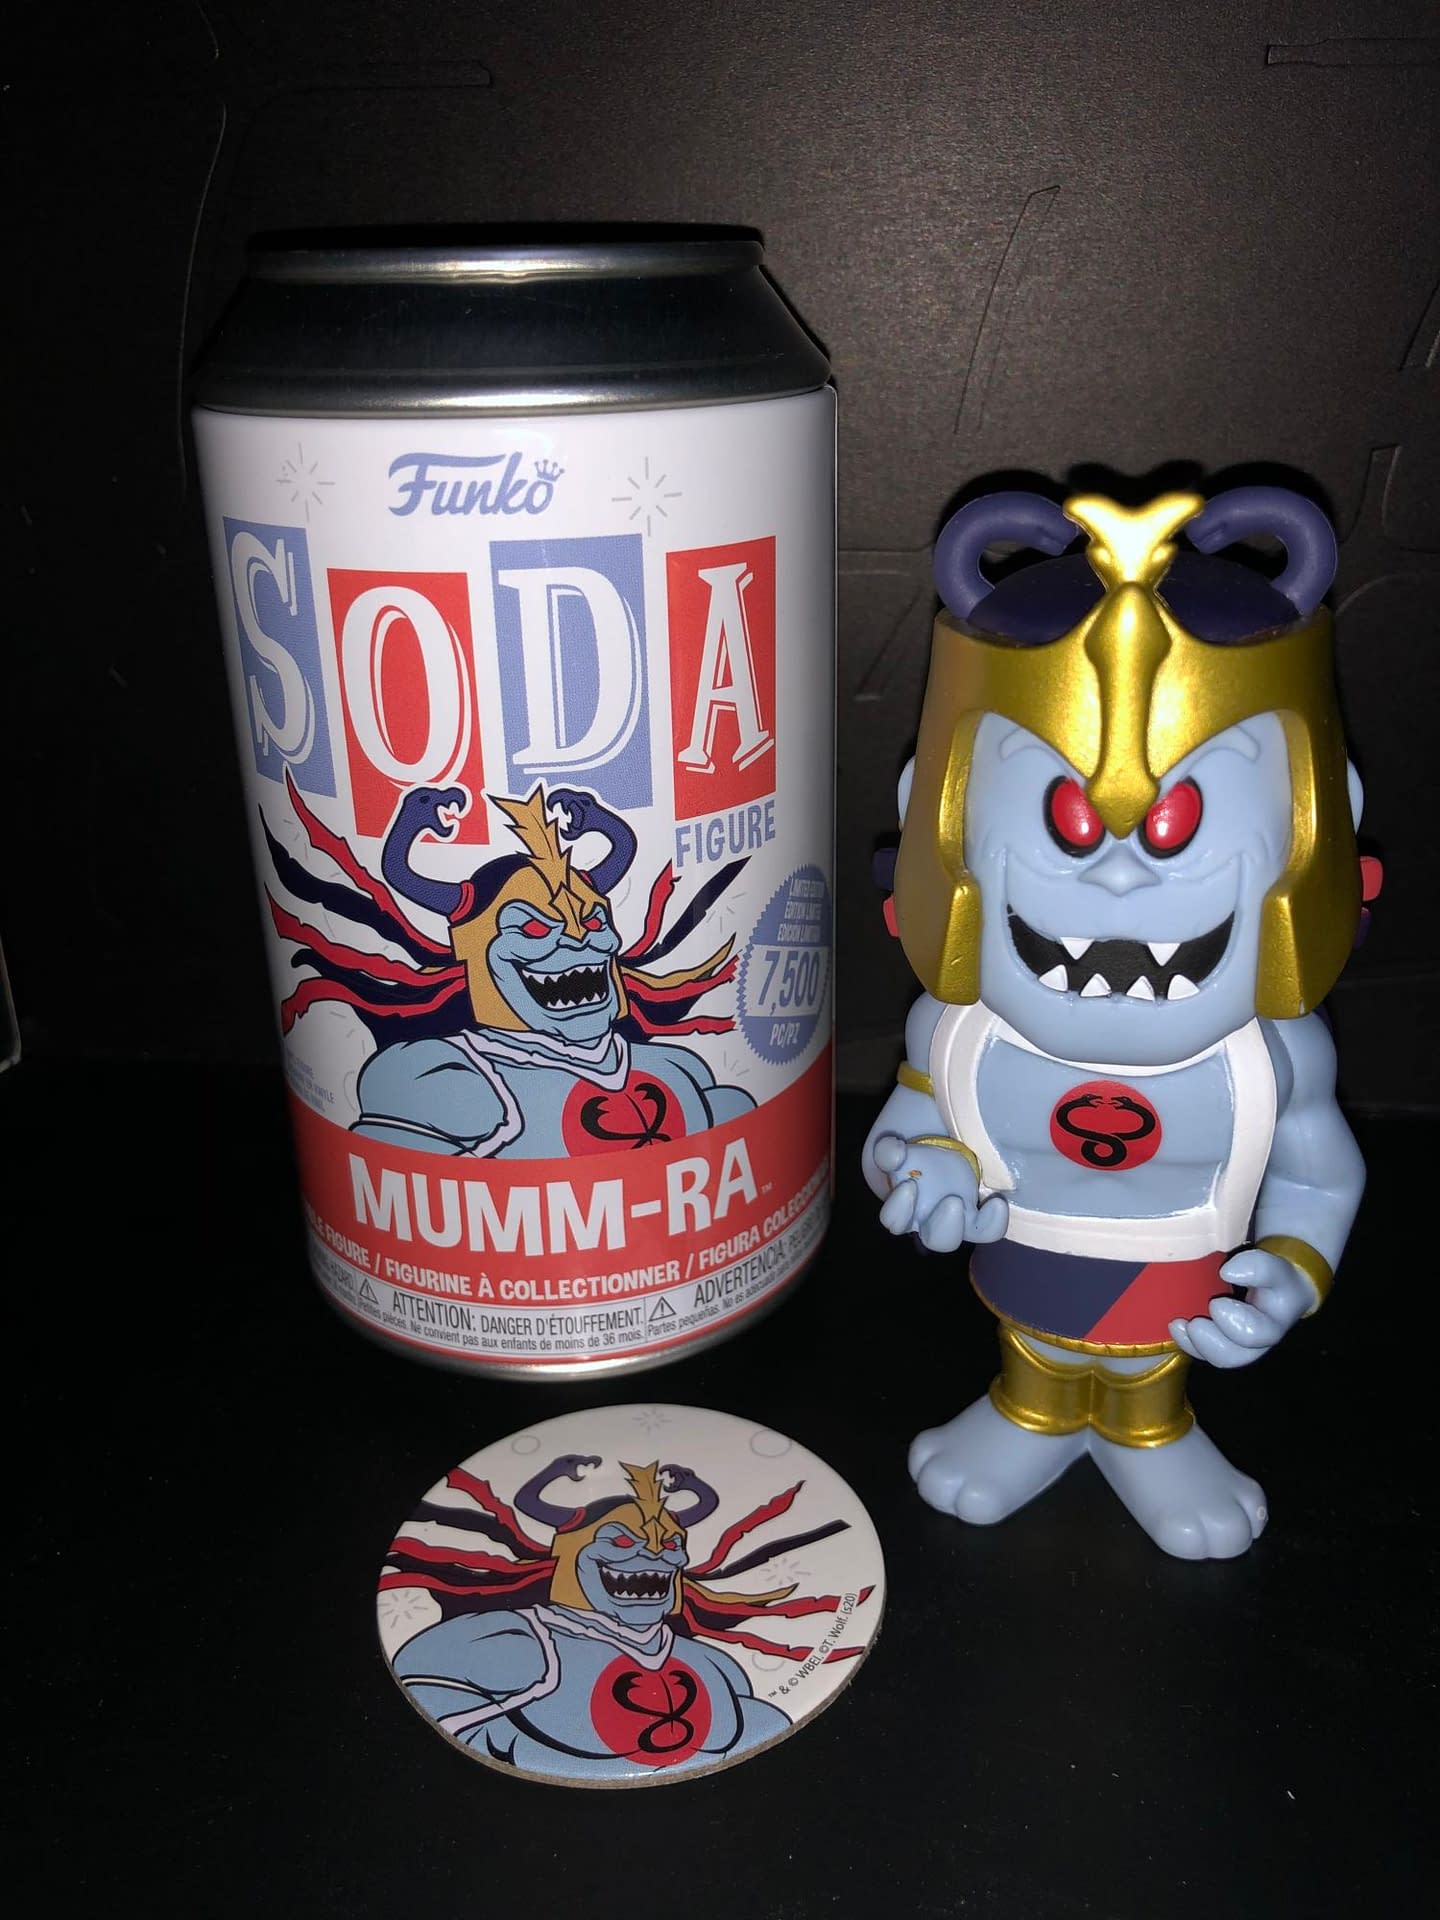 Funko Soda Vinyl Figure Thundercats Mumm-Ra Figure and can front view.